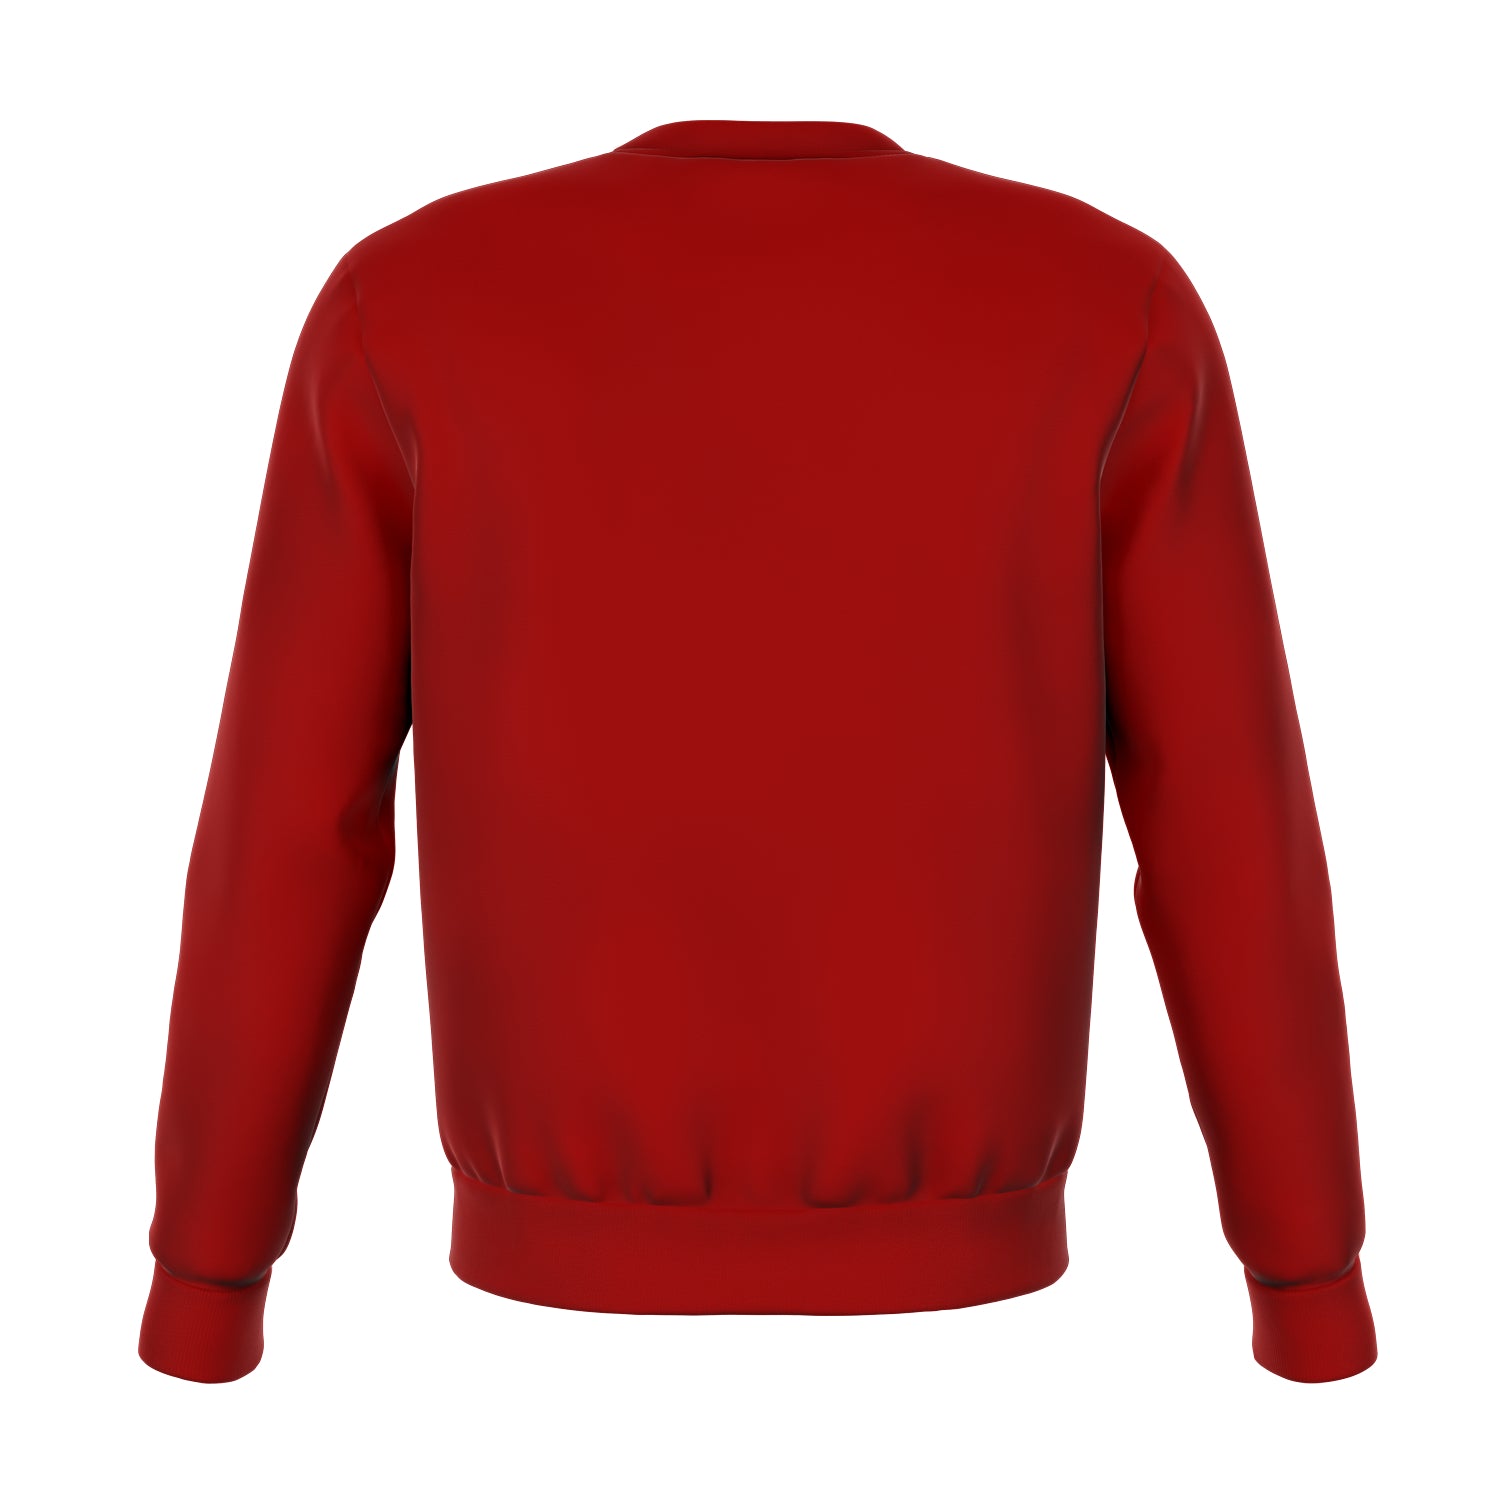 ARDA Athletic Sweatshirt - Red